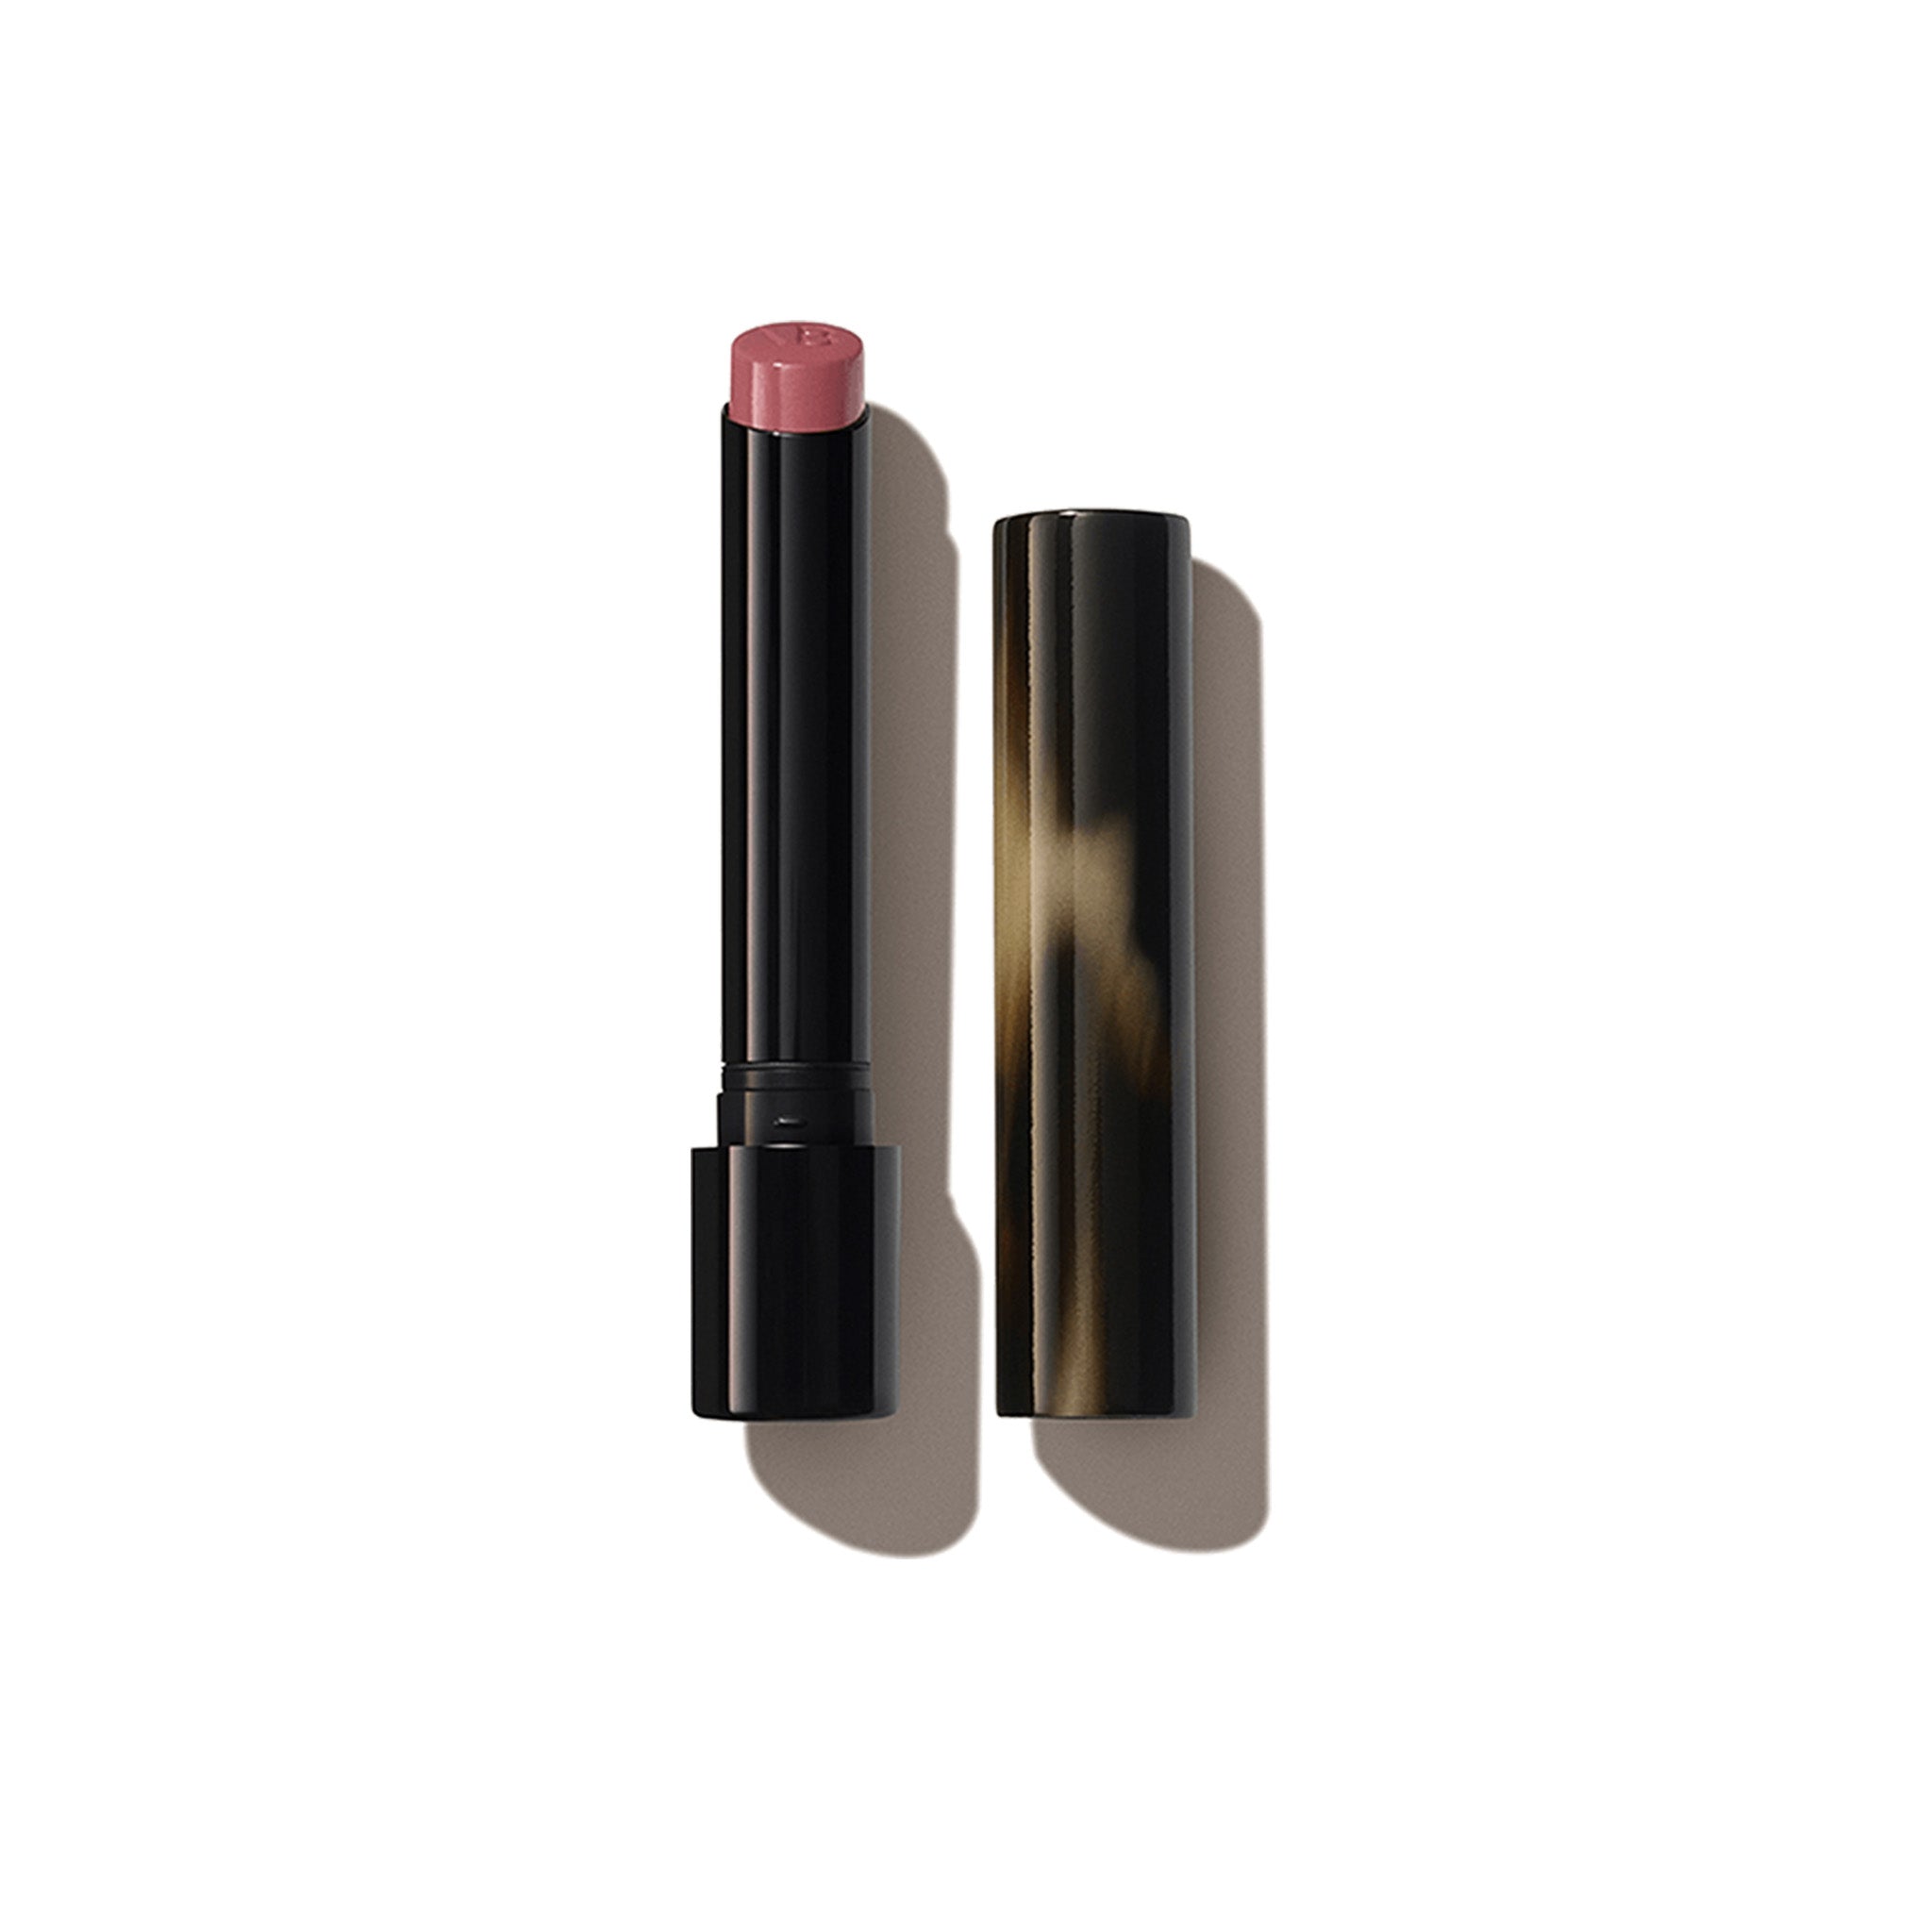 Victoria Beckham Beauty Posh Lipstick - Sway